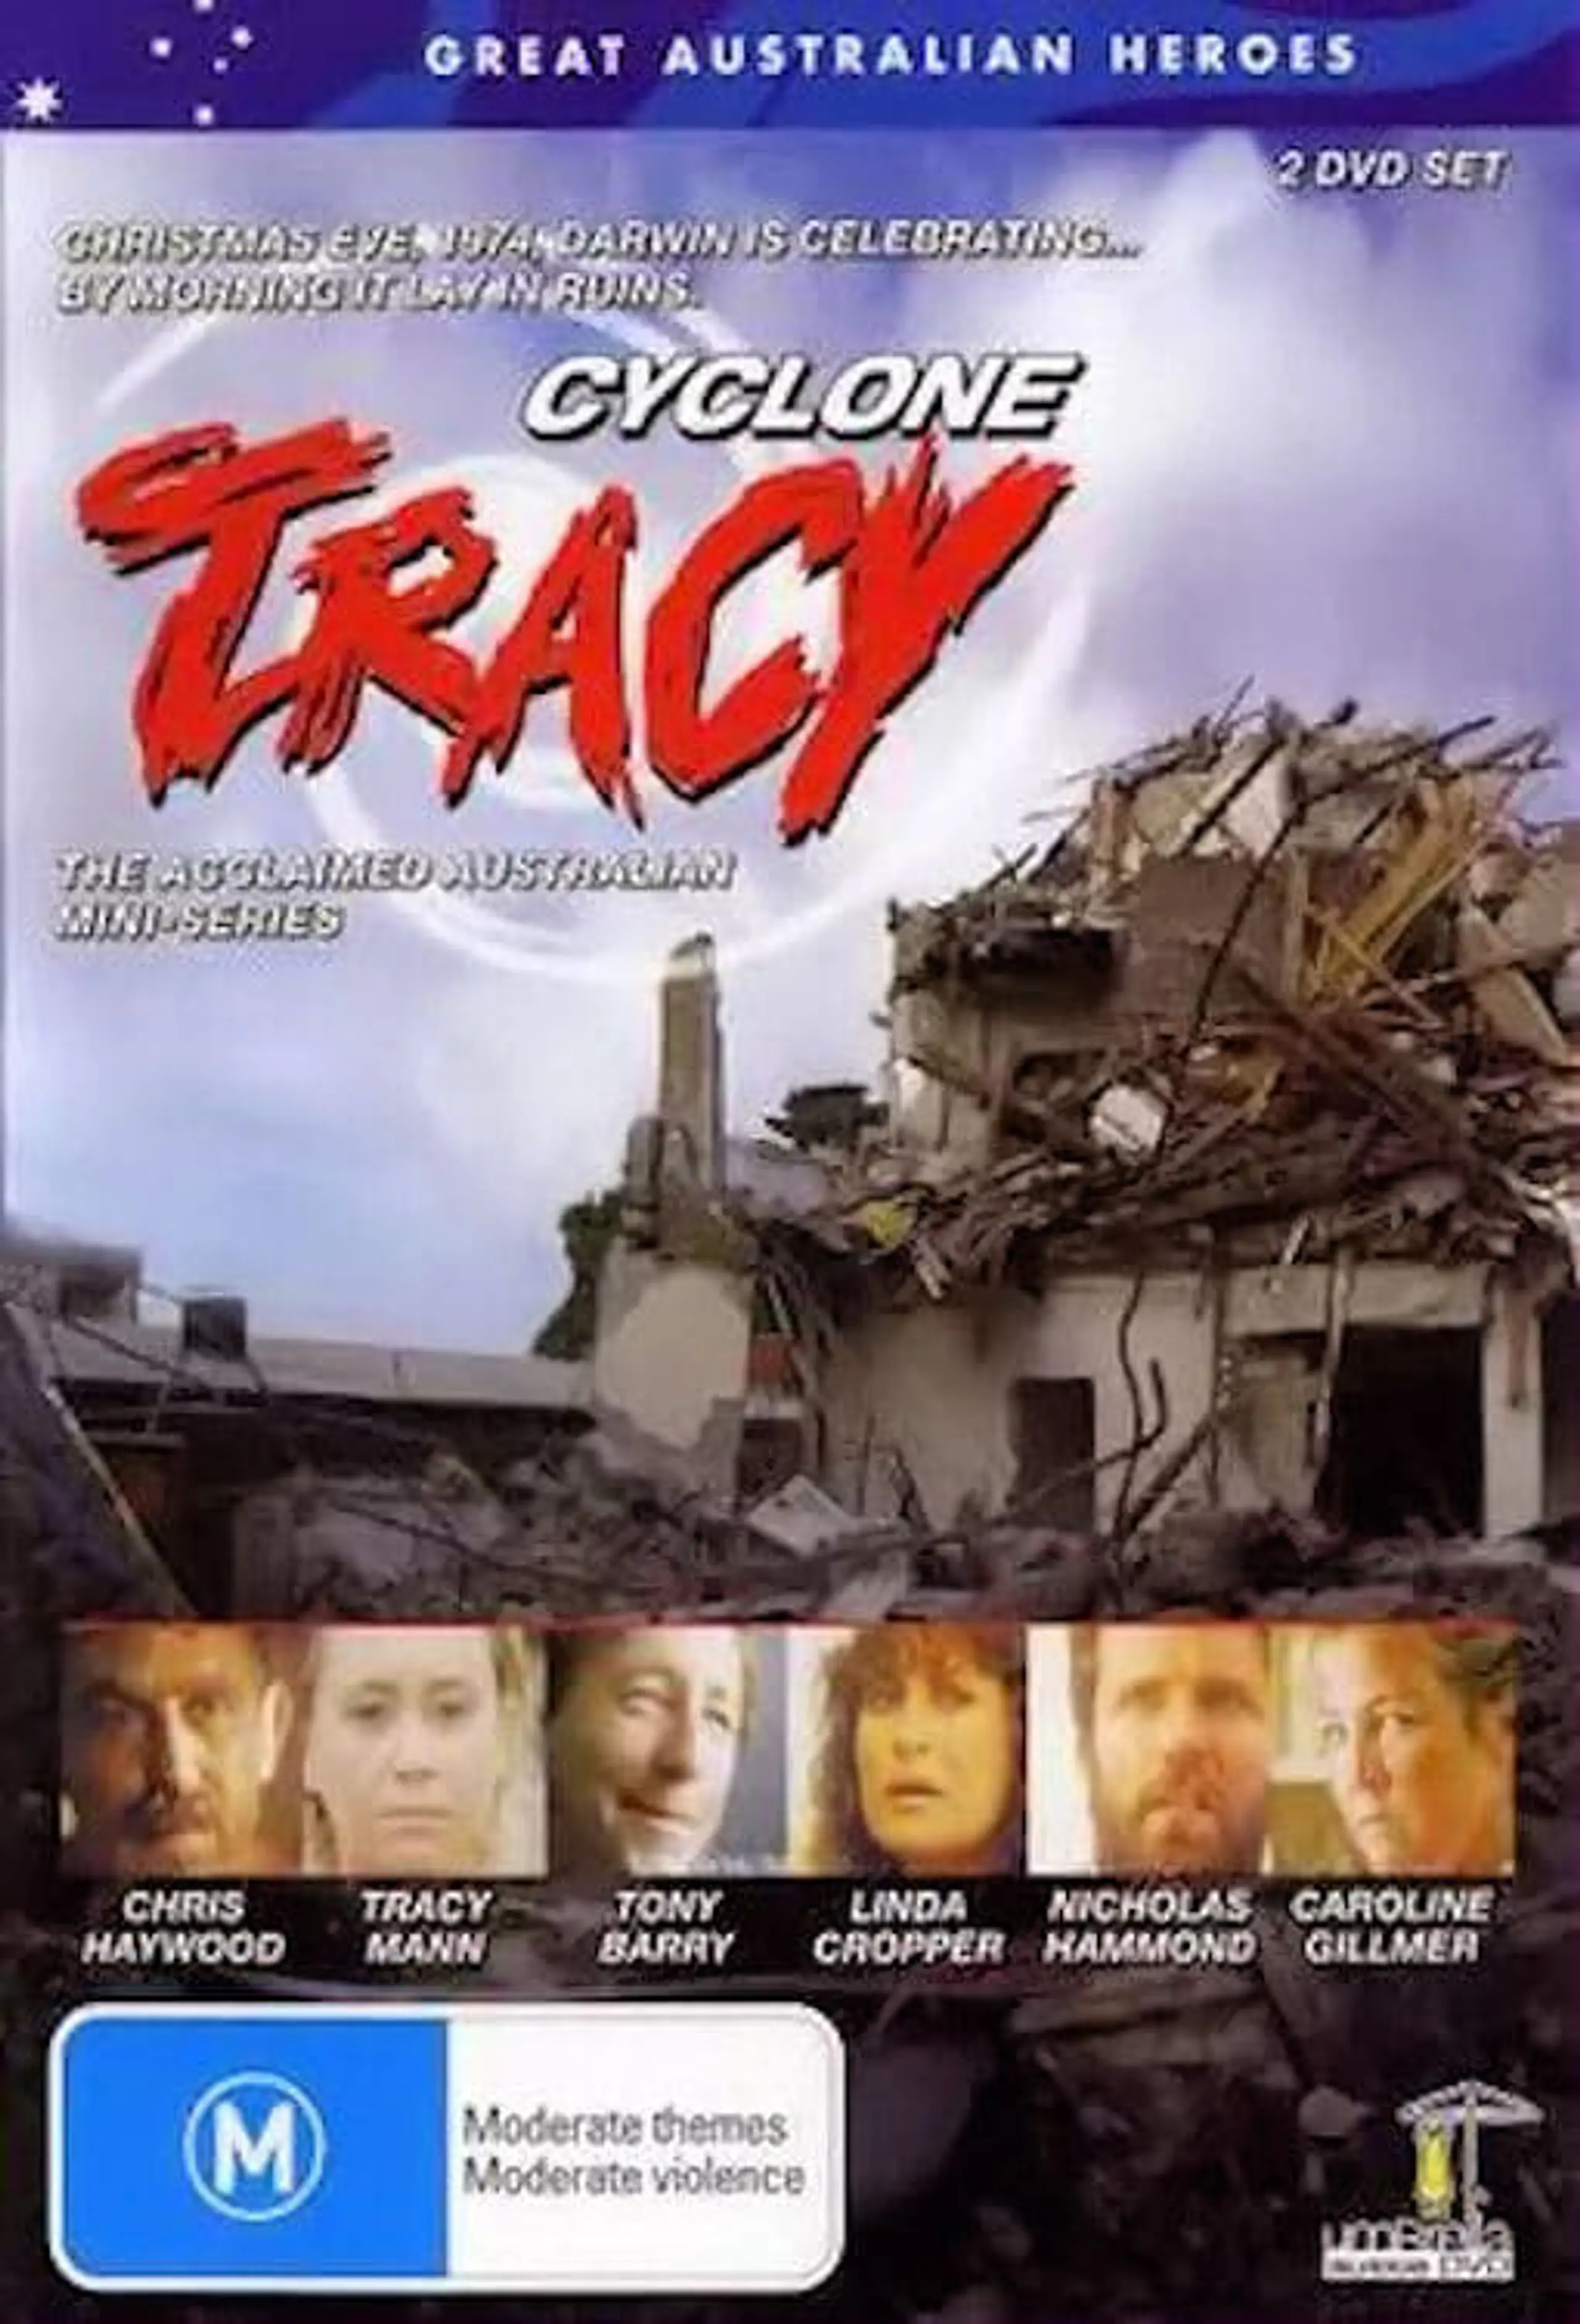 Cyclone Tracy